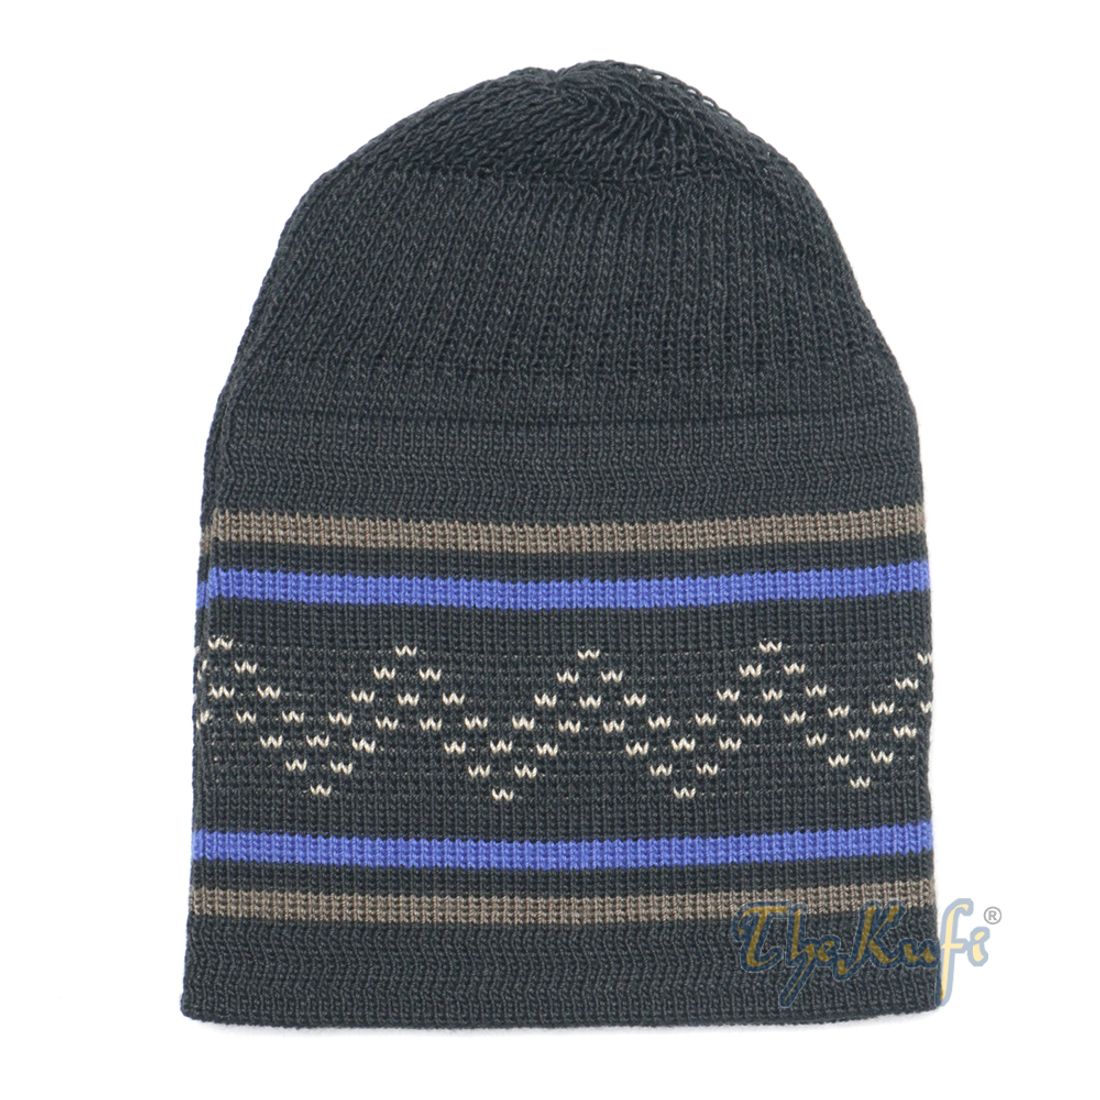 Dark Blue Brown Stripe Stretch-knit Zigzag Kufi Hat Skull Cap Beanie